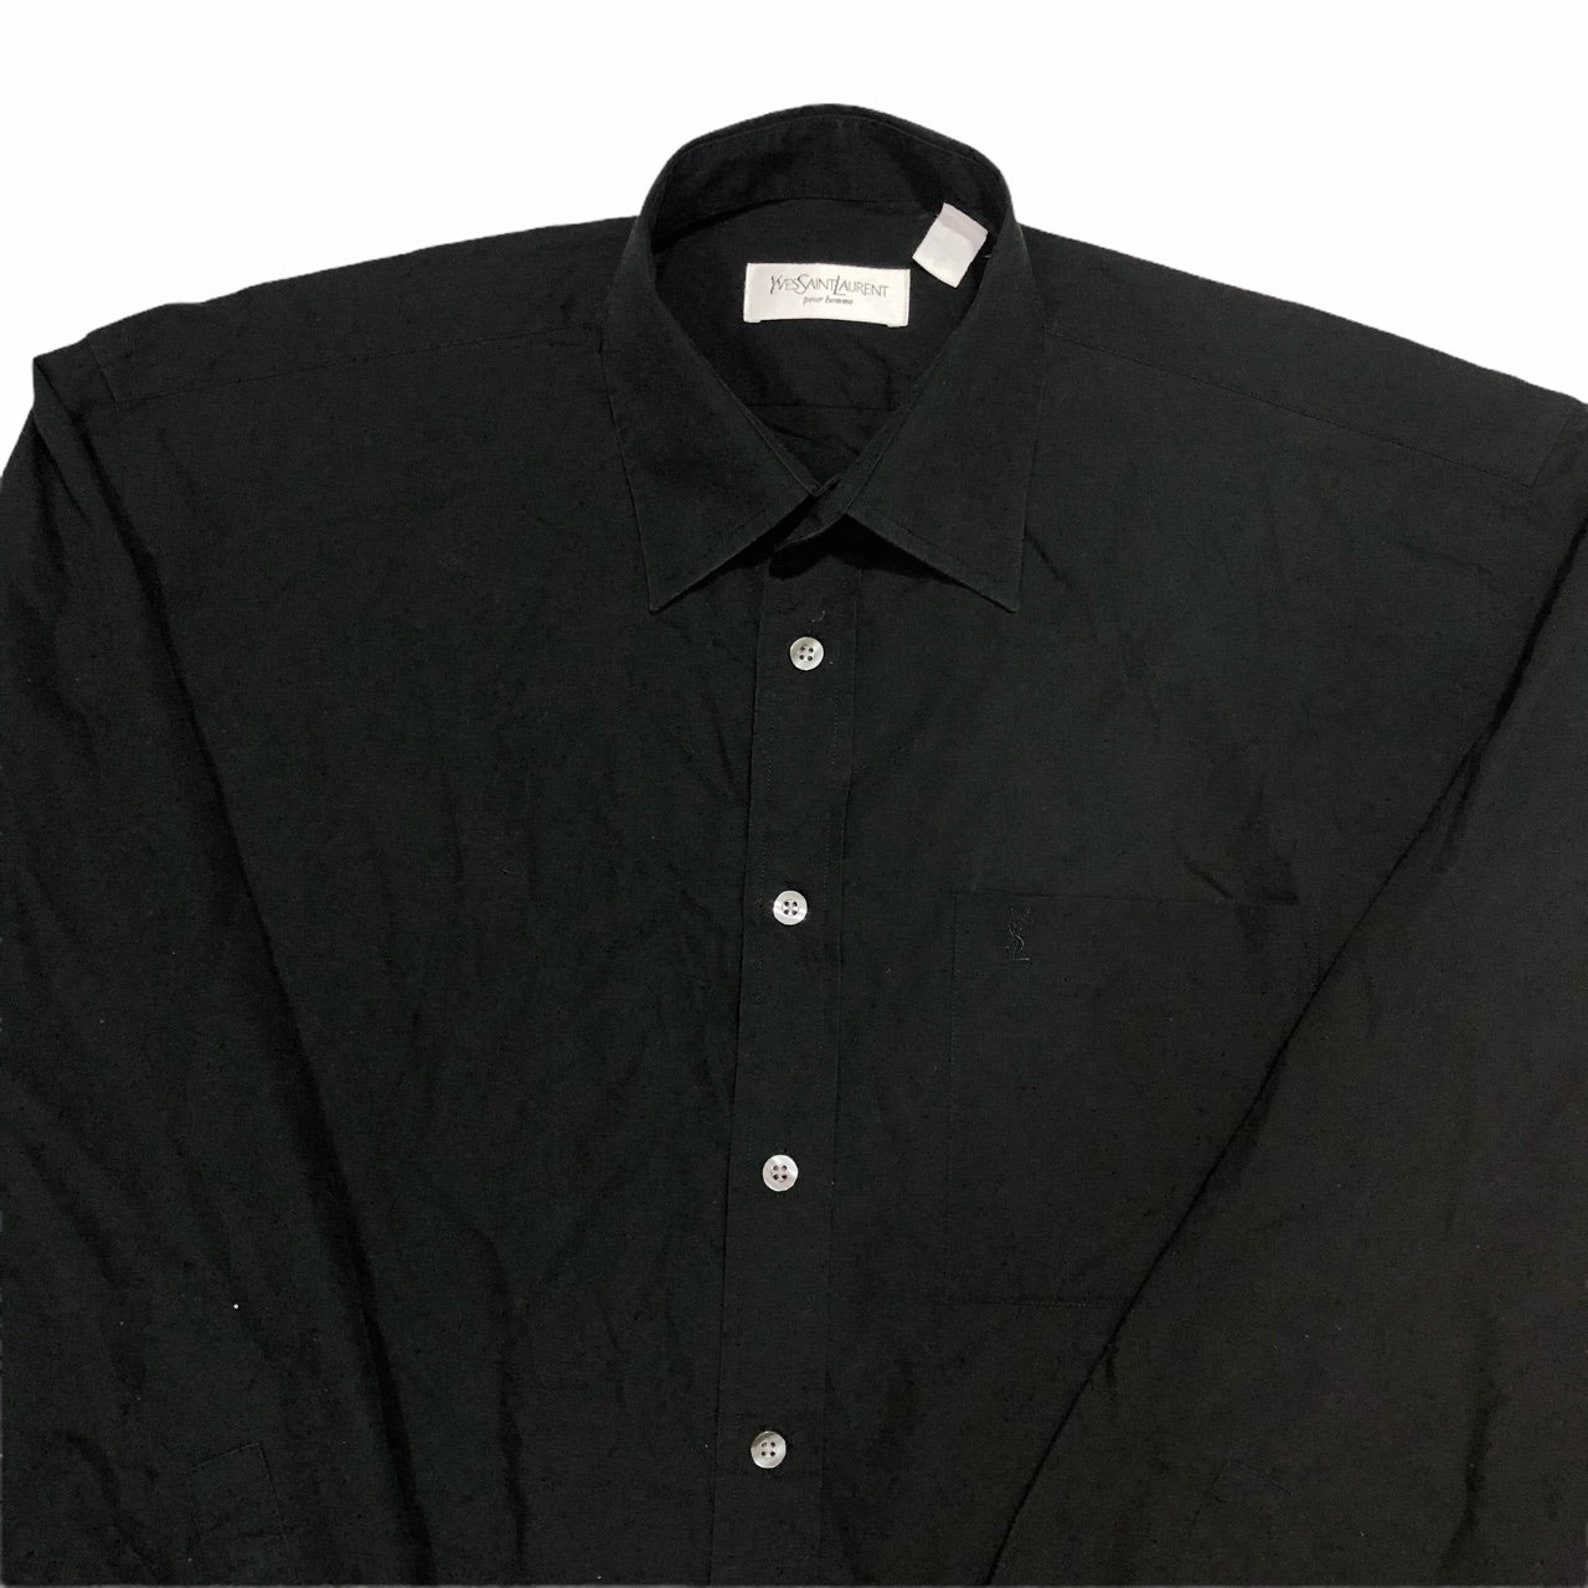 Vintage Yves Saint Laurent Black Button Up Longsleeve Shirt | Etsy